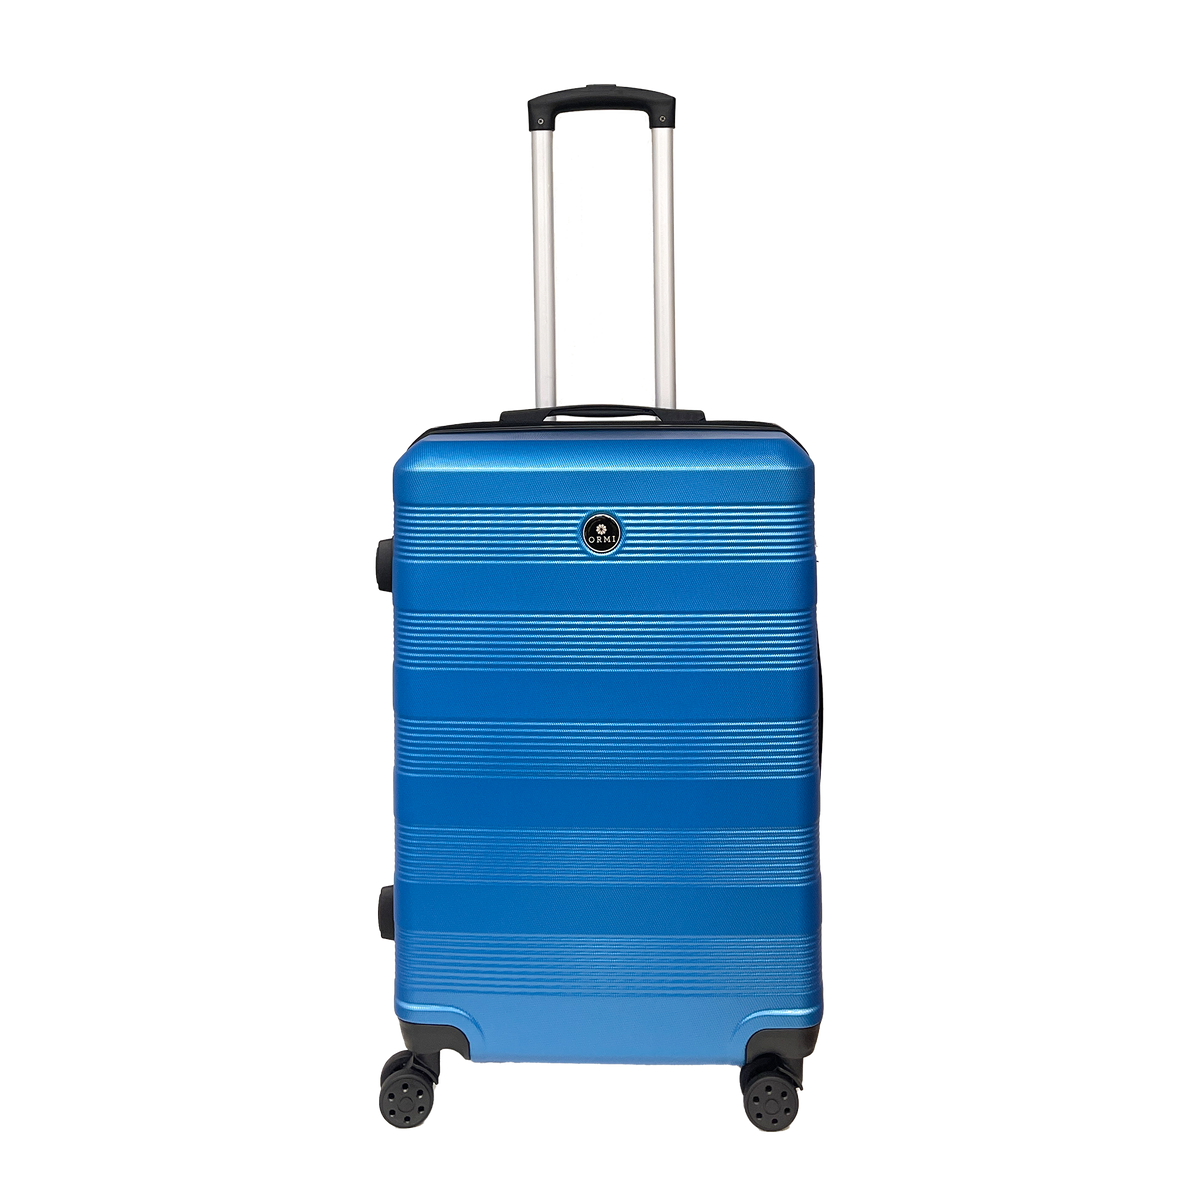 Ormi Tenwave Medium Hardshell Trolley Suitcase 65x43x26 cm | Ultra Lightweight in ABS | 4 High-Quality 360° Swivel Wheels | Unisex